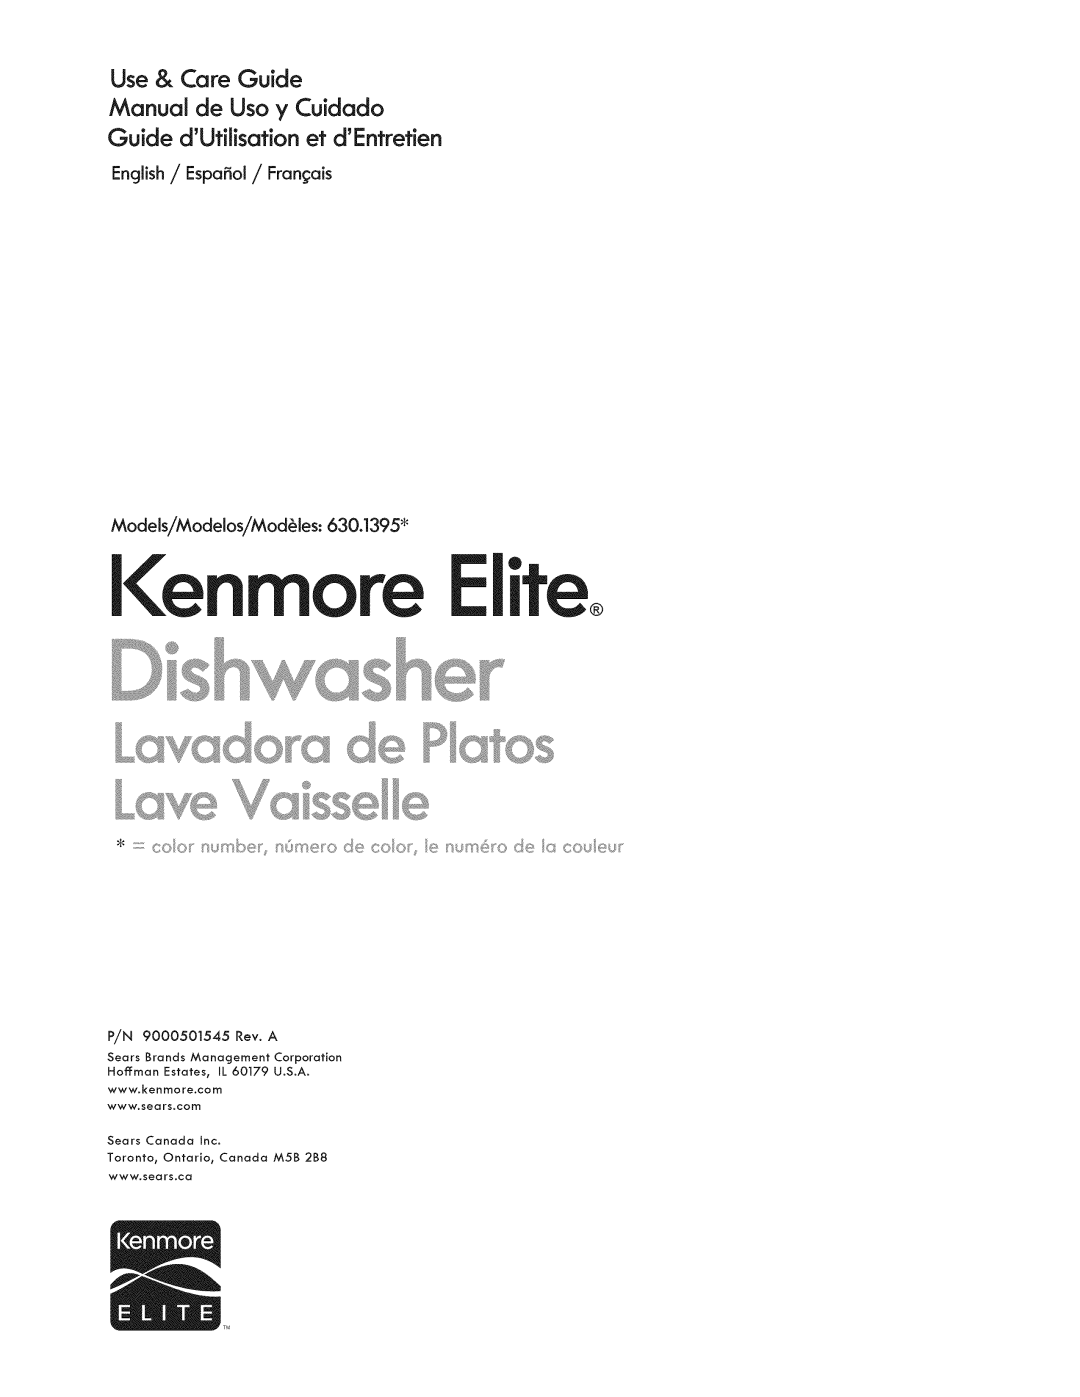 Kenmore 630.1395 manual I enmore Elite, English / EspaSol/Frangais, Models/Modelos/Mod les, www sears com 